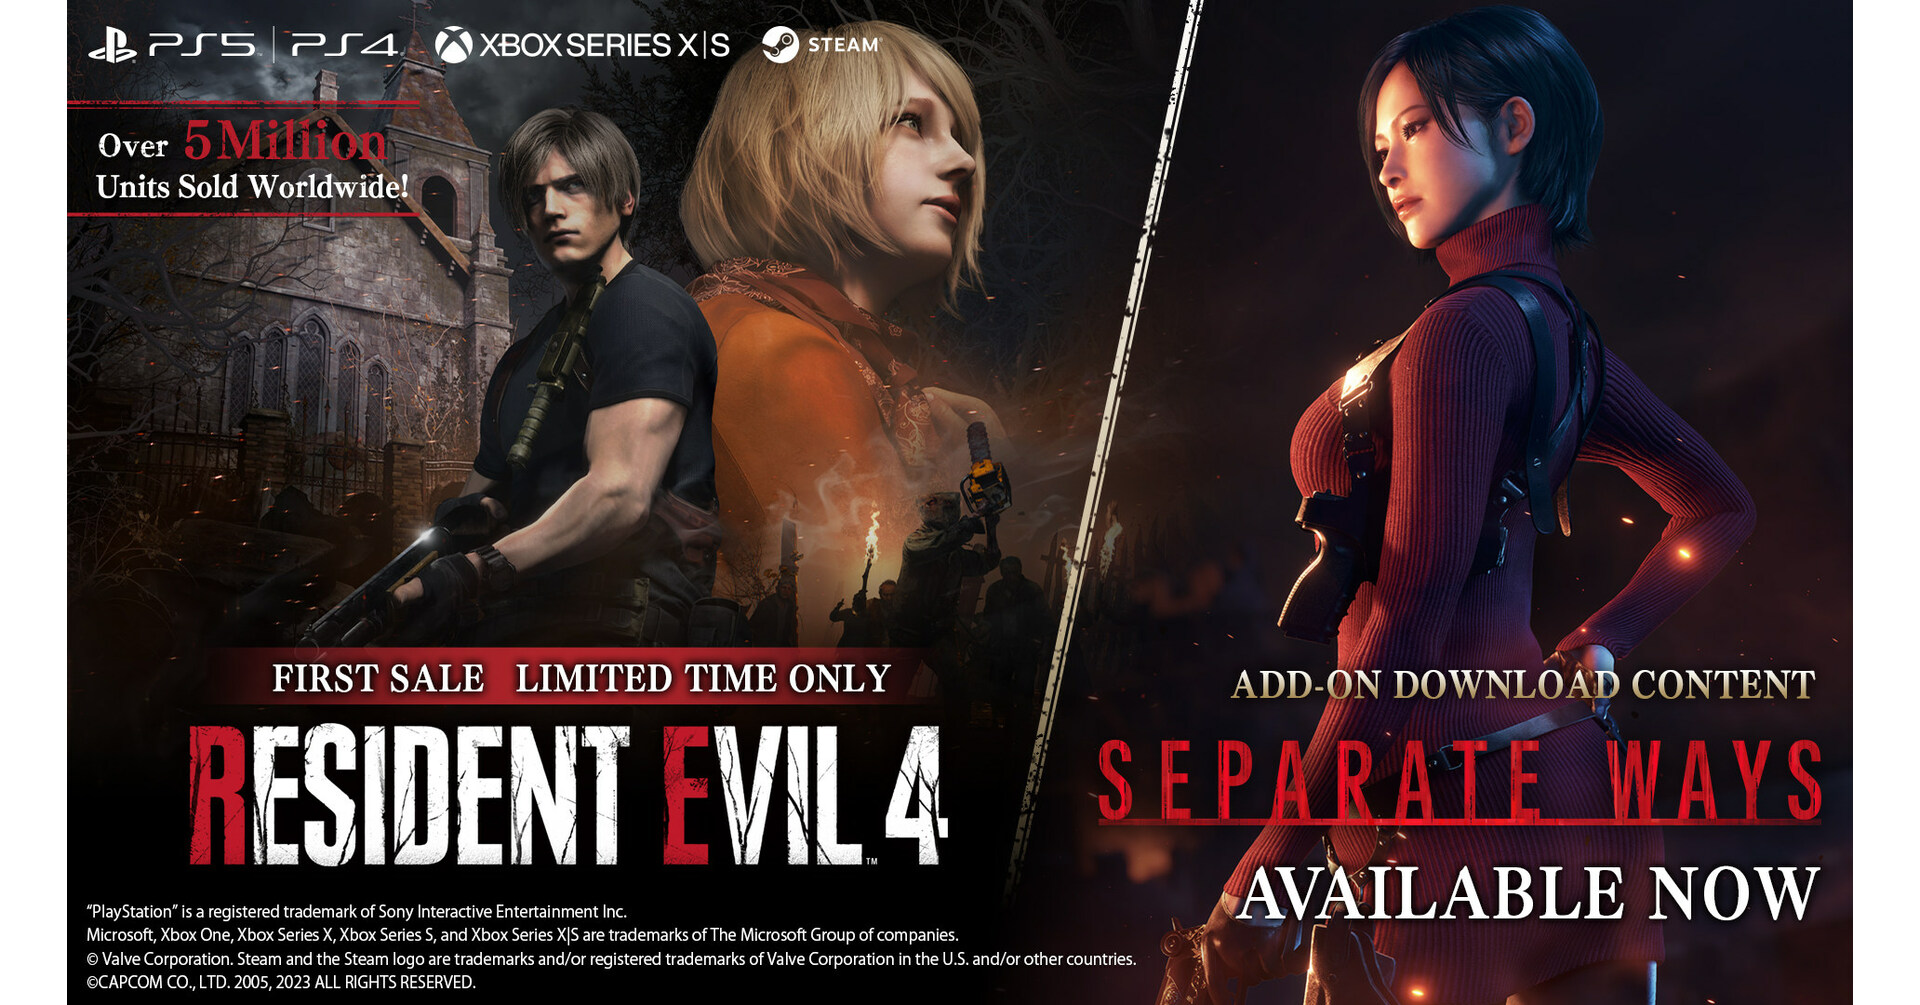 Resident Evil 4 - Separate Ways Trailer